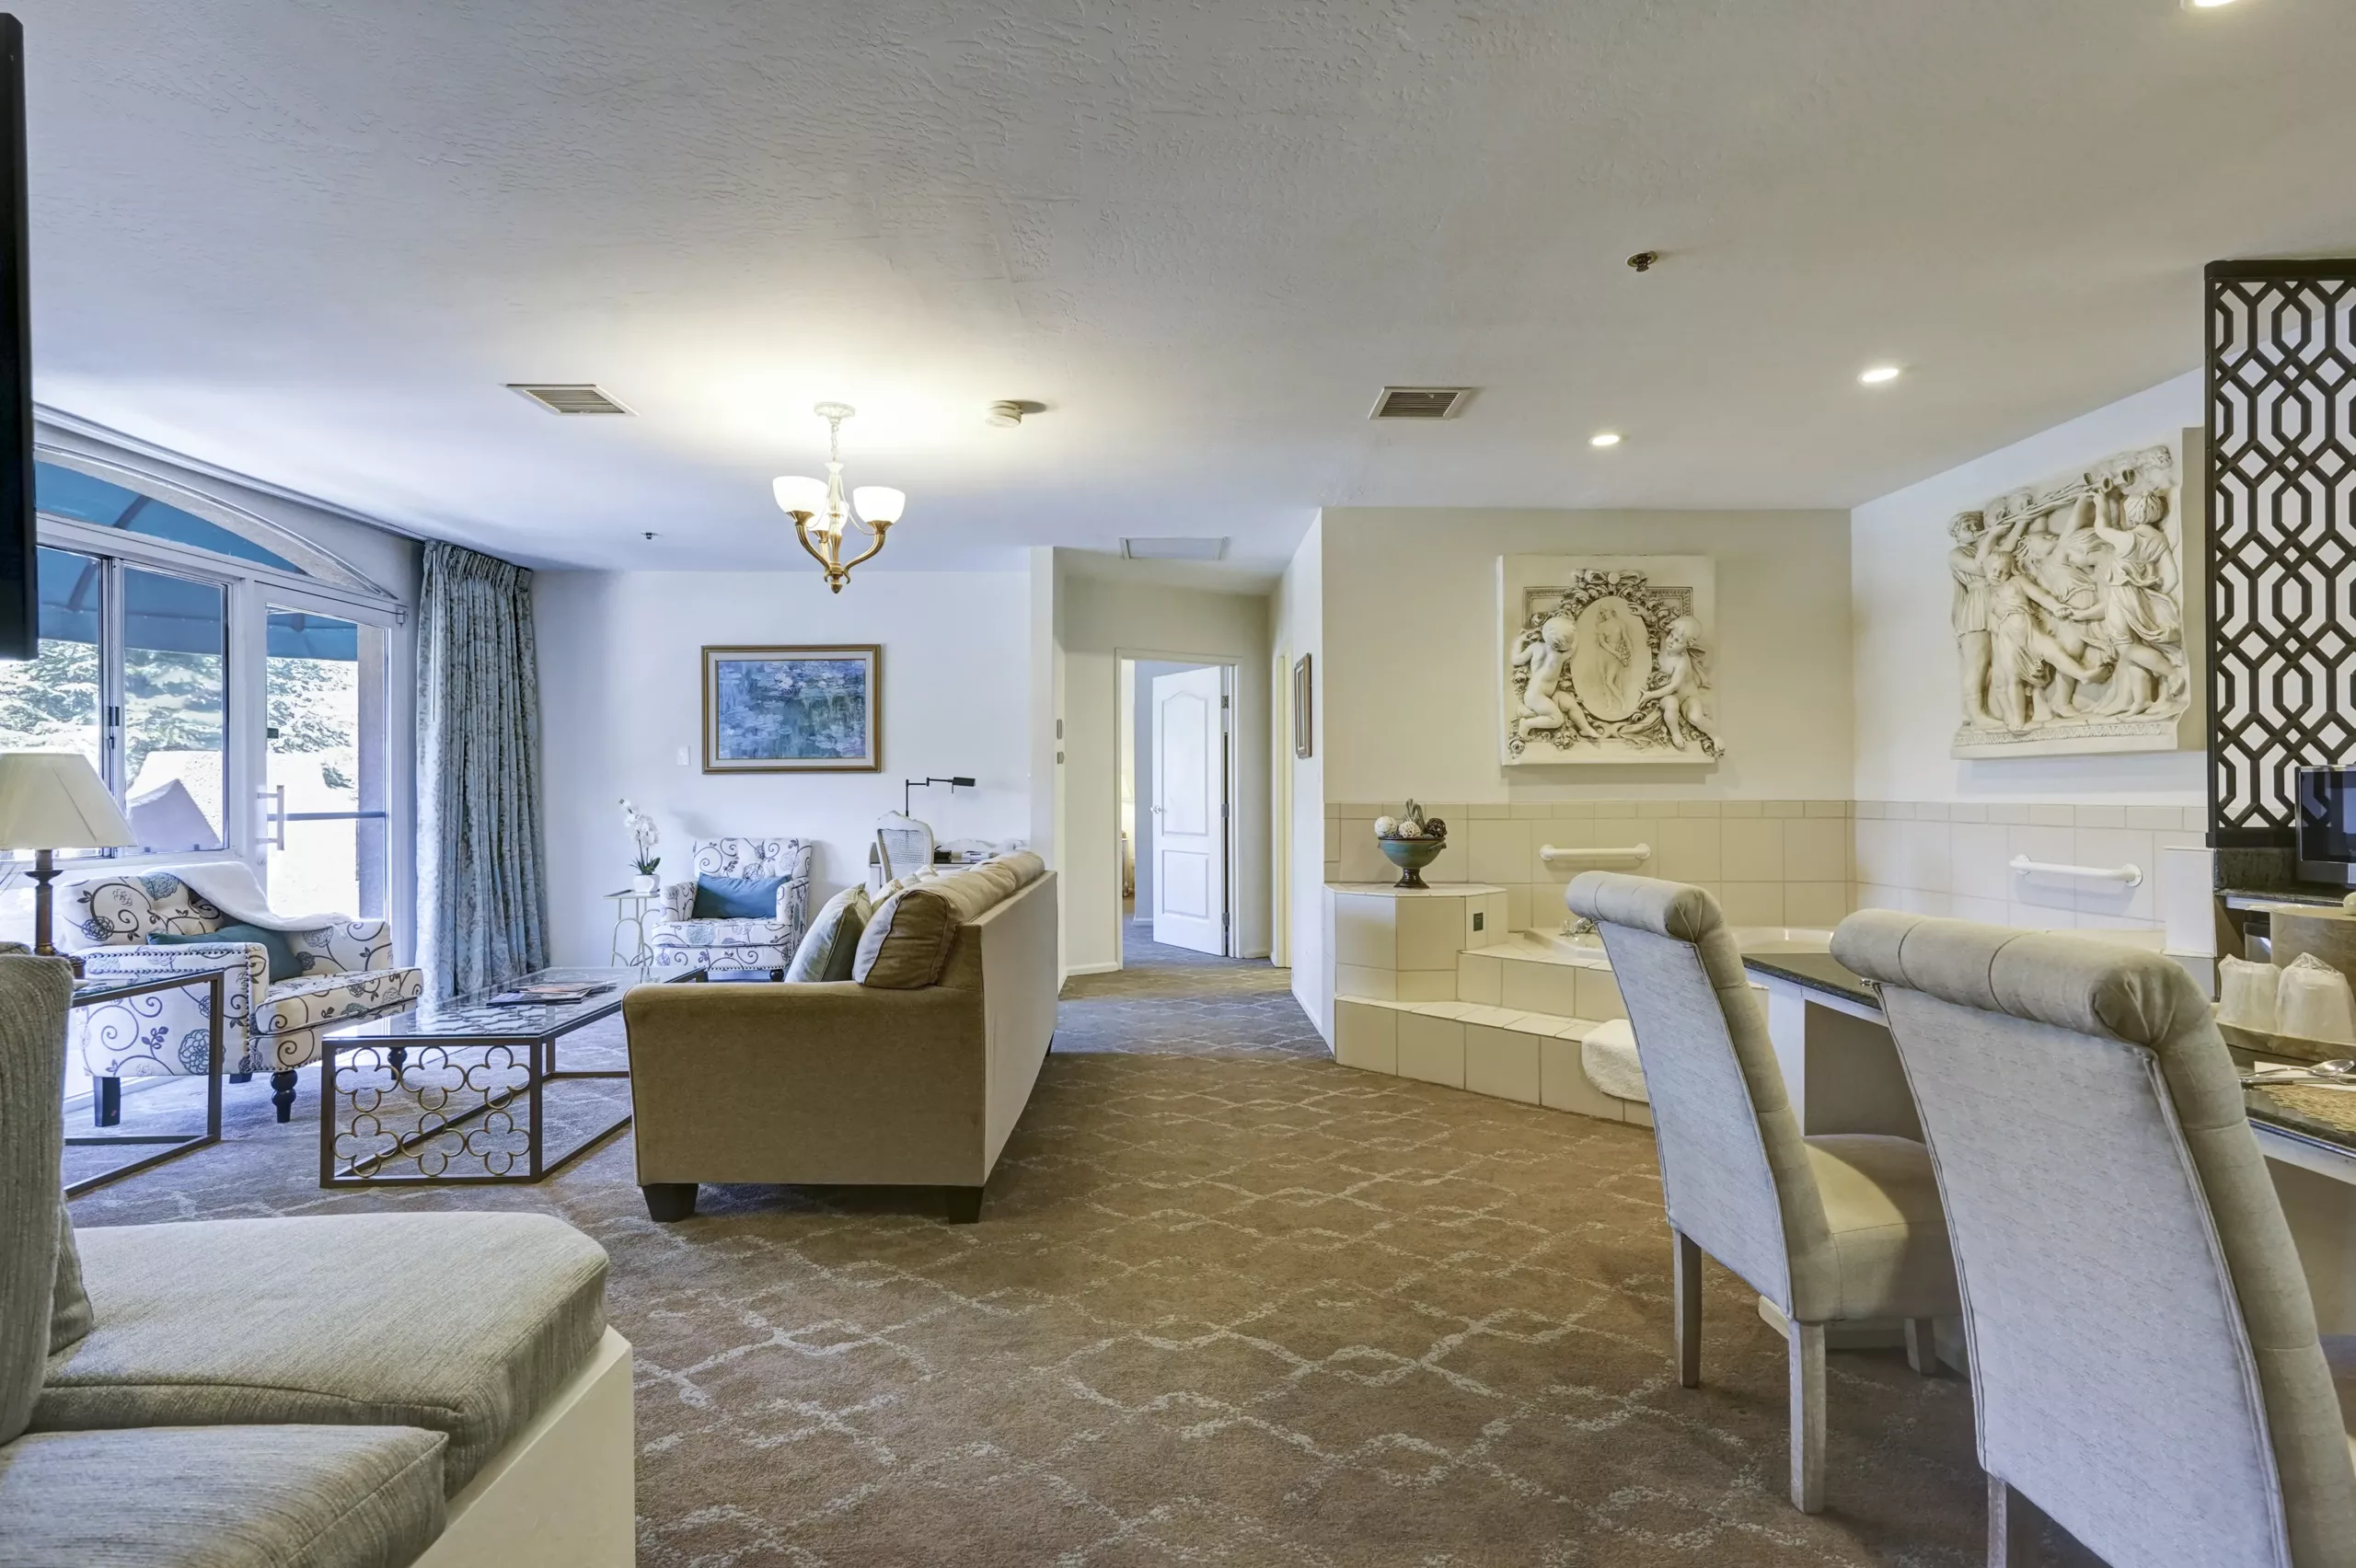 Luxury King Suite Room at Forest Villas Hotel in Prescott AZ